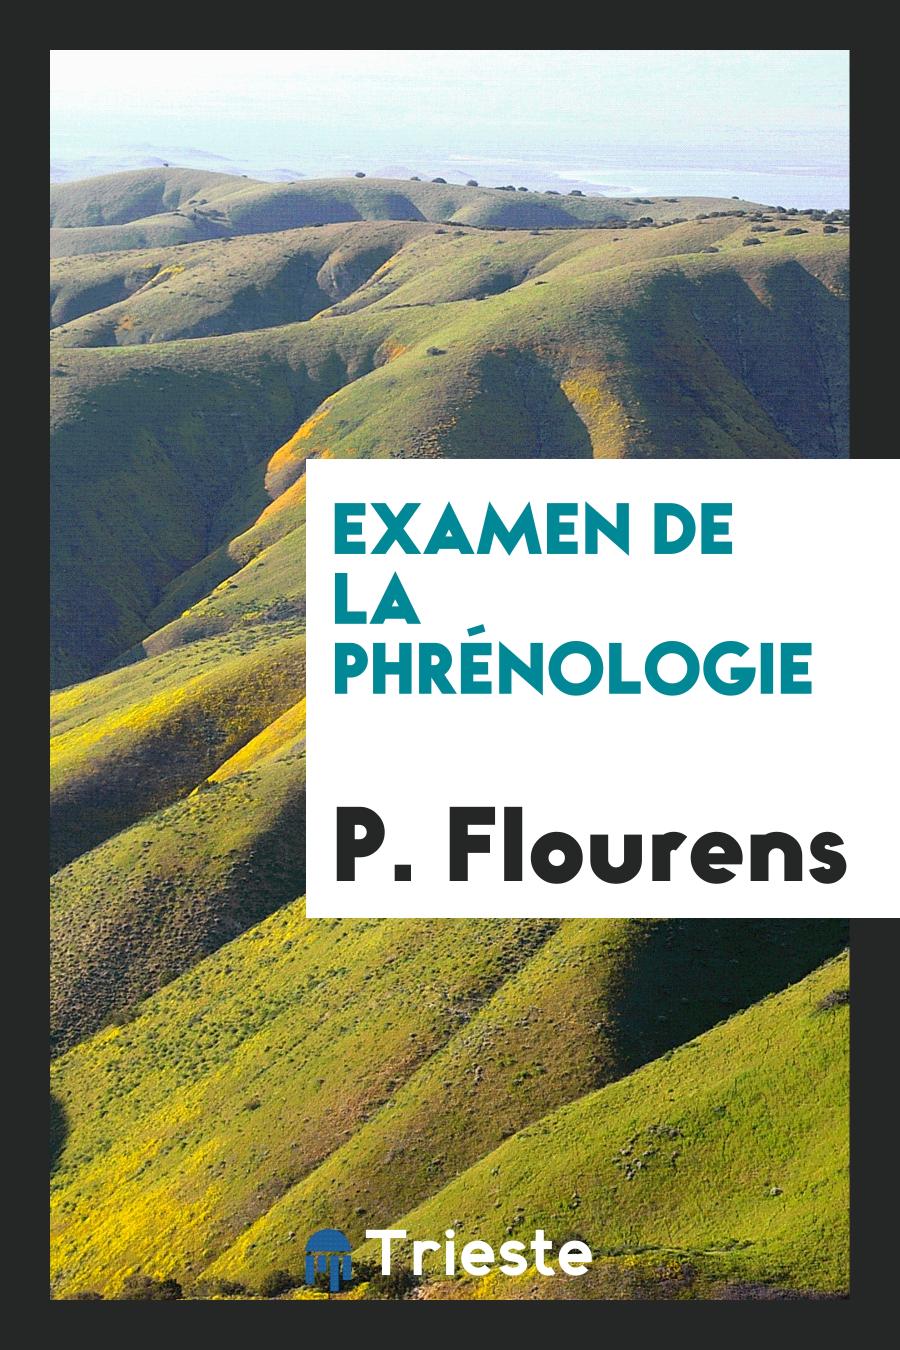 P. Flourens - Examen de la Phrénologie